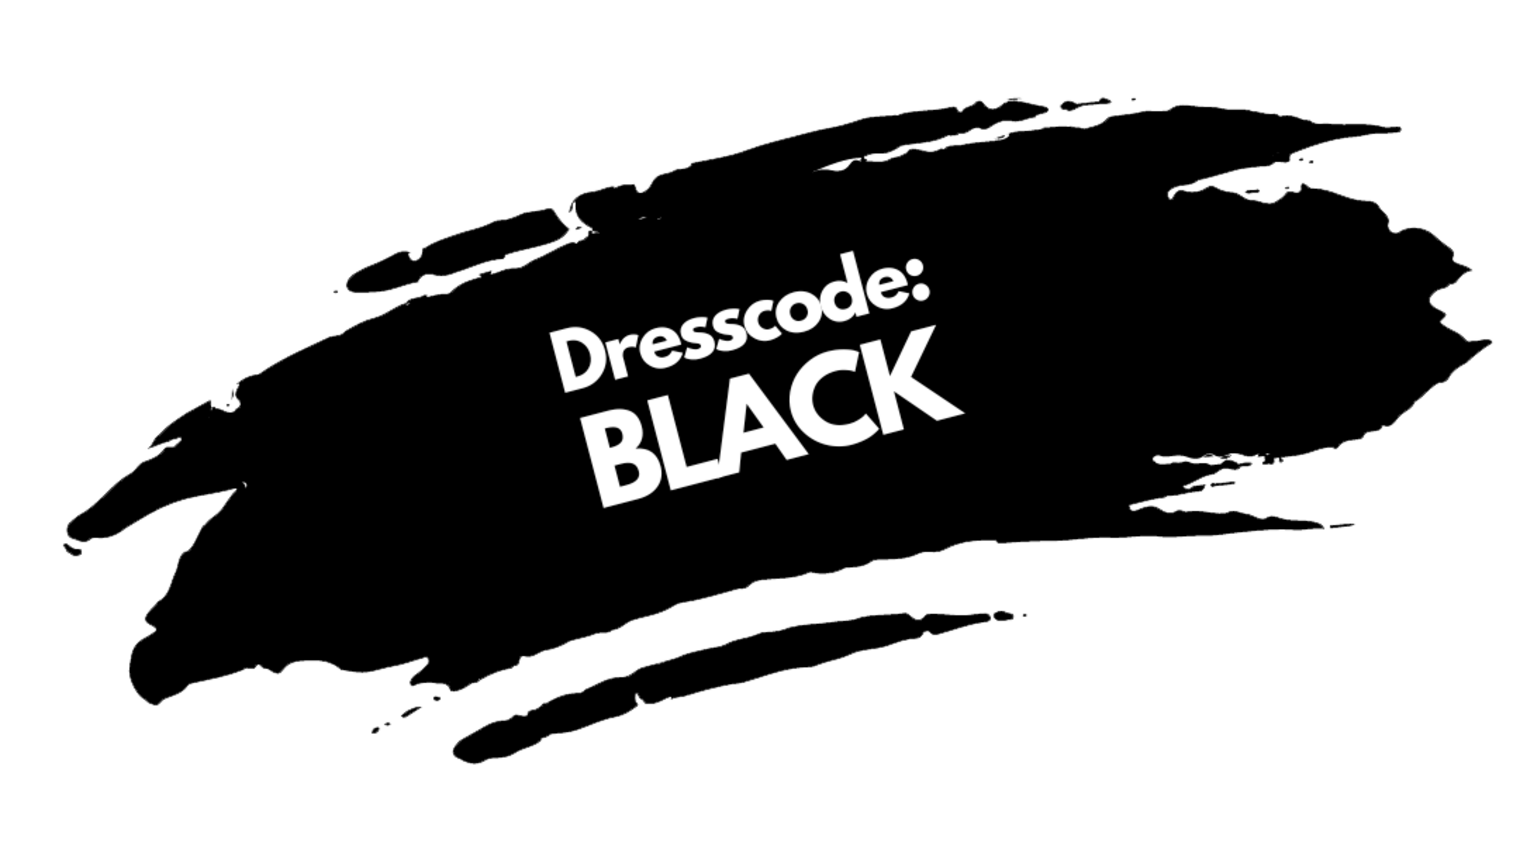 Dresscode: Black Inspiration Night